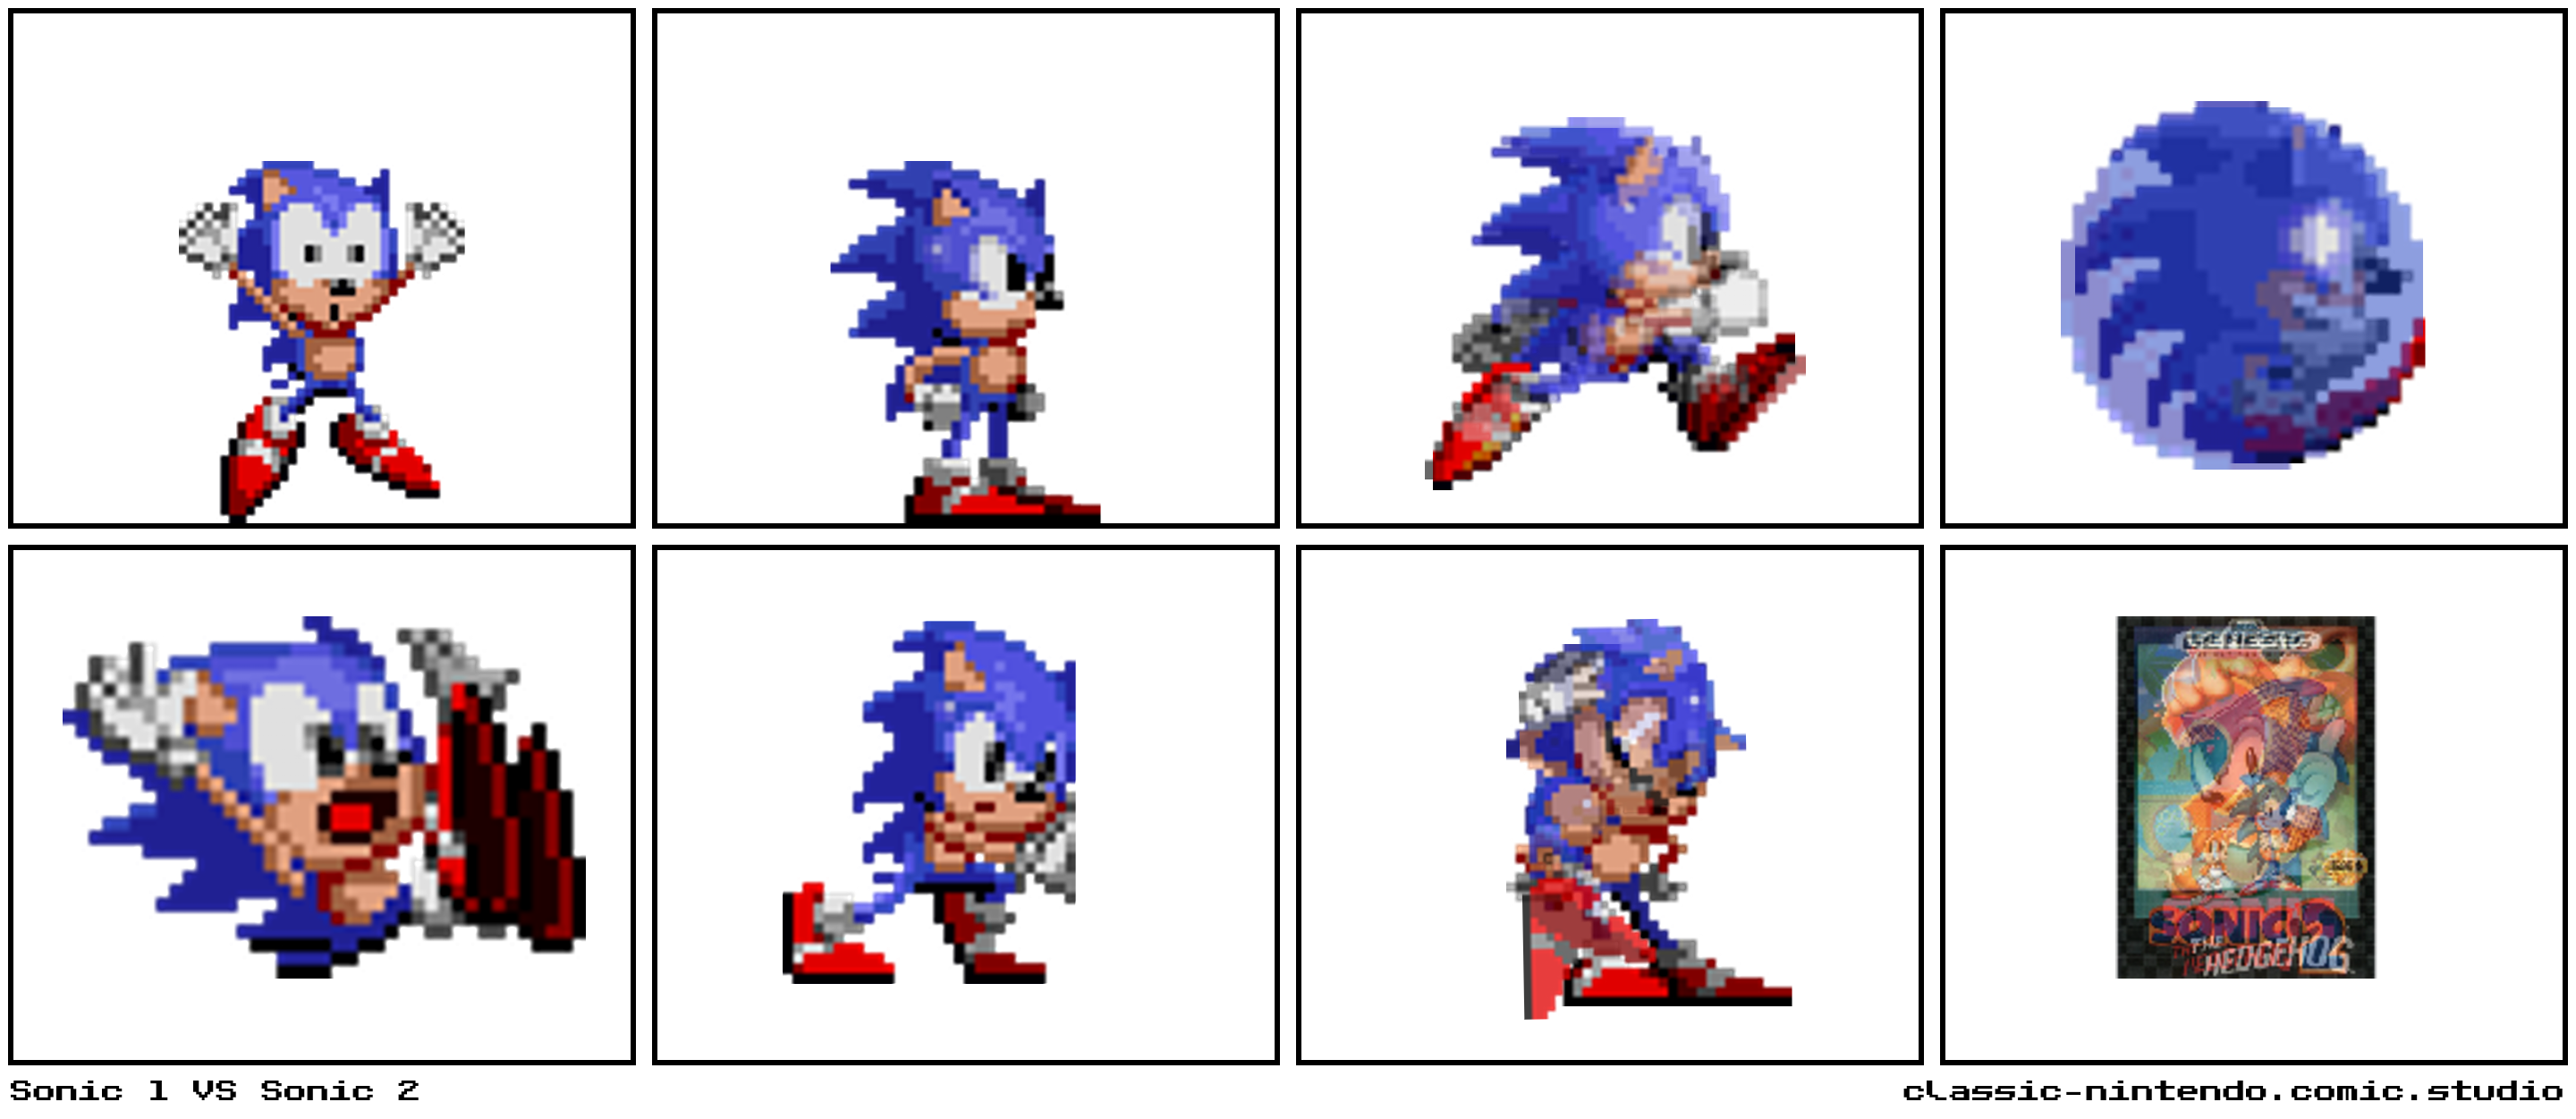 Sonic 1 VS Sonic 2